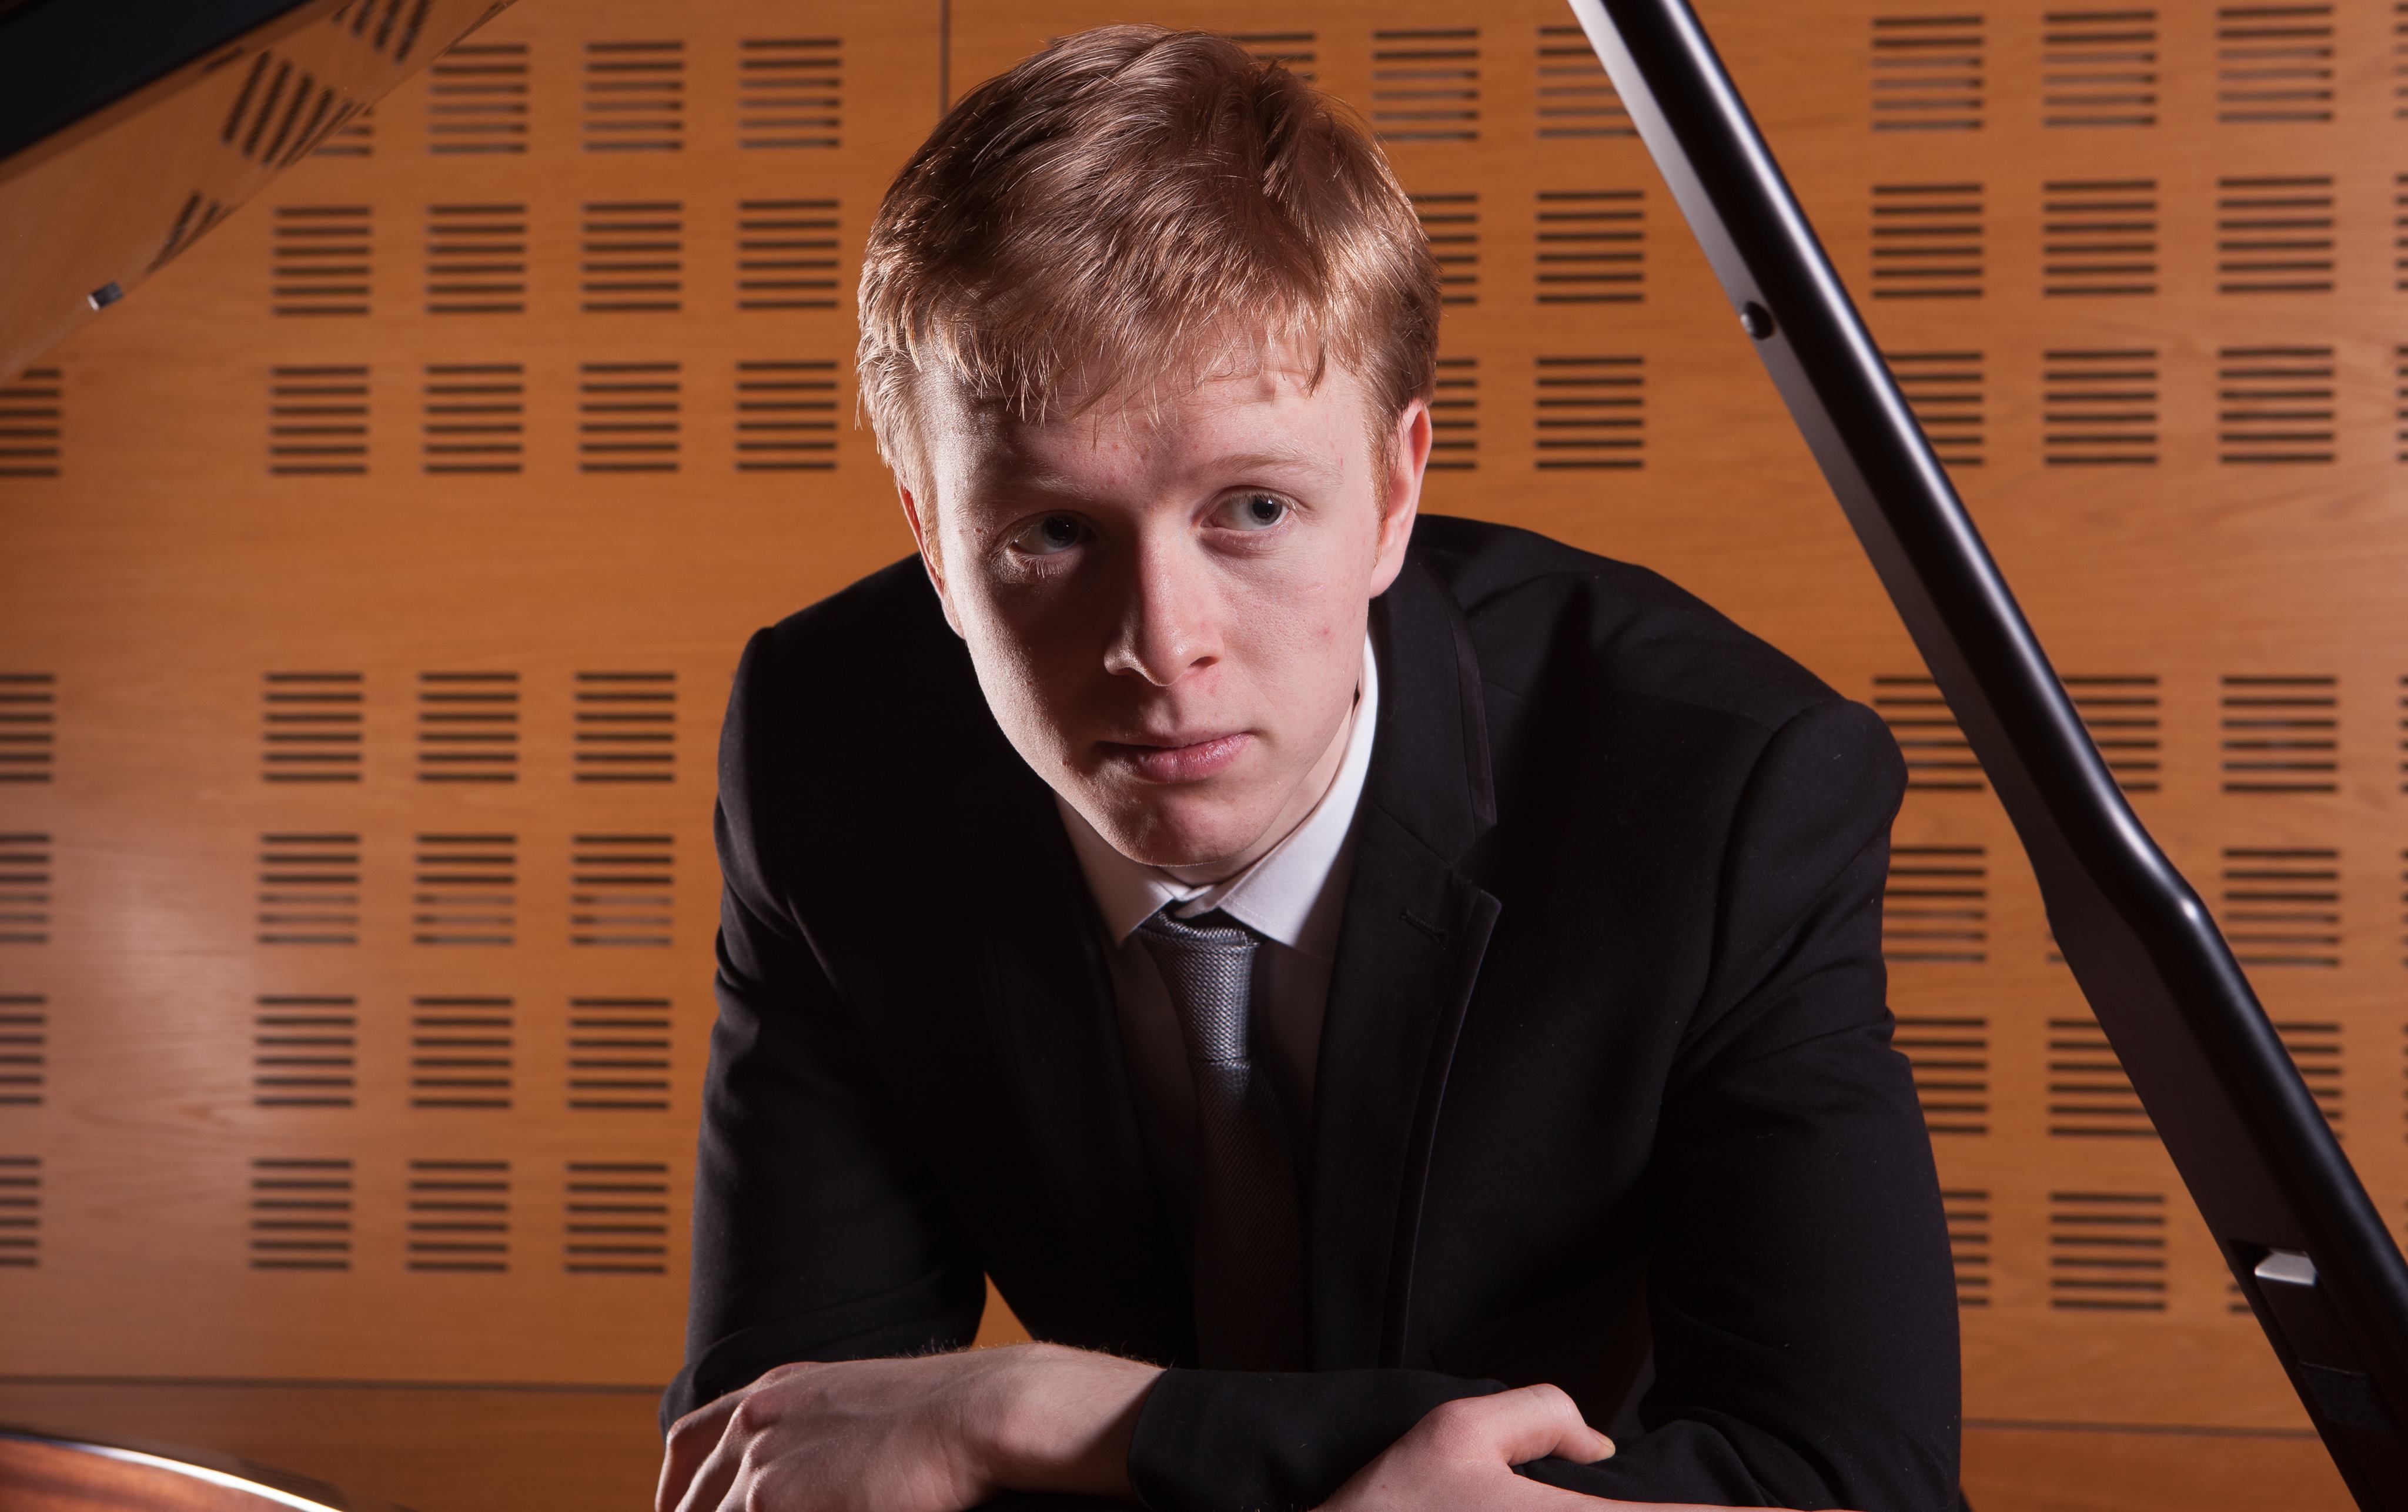 Young piano virtuoso Luke swaps global stage for Wrexham chapel